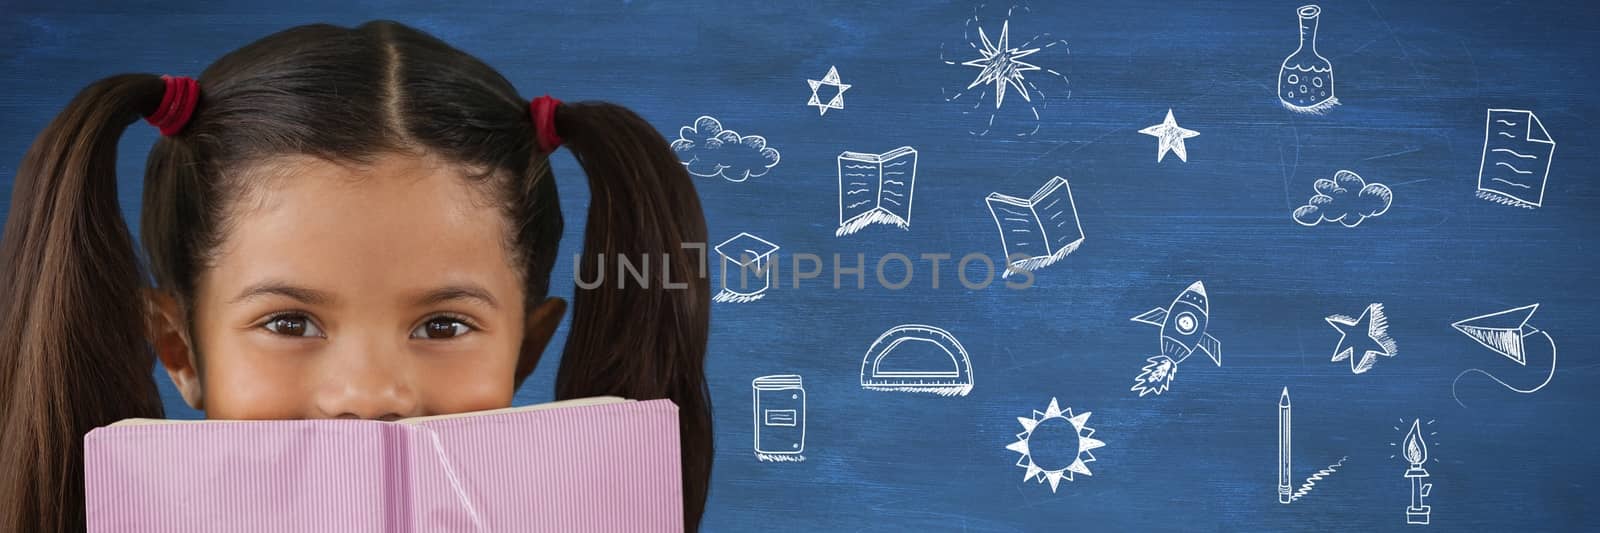 School girl reading and Education drawing on blackboard for school by Wavebreakmedia